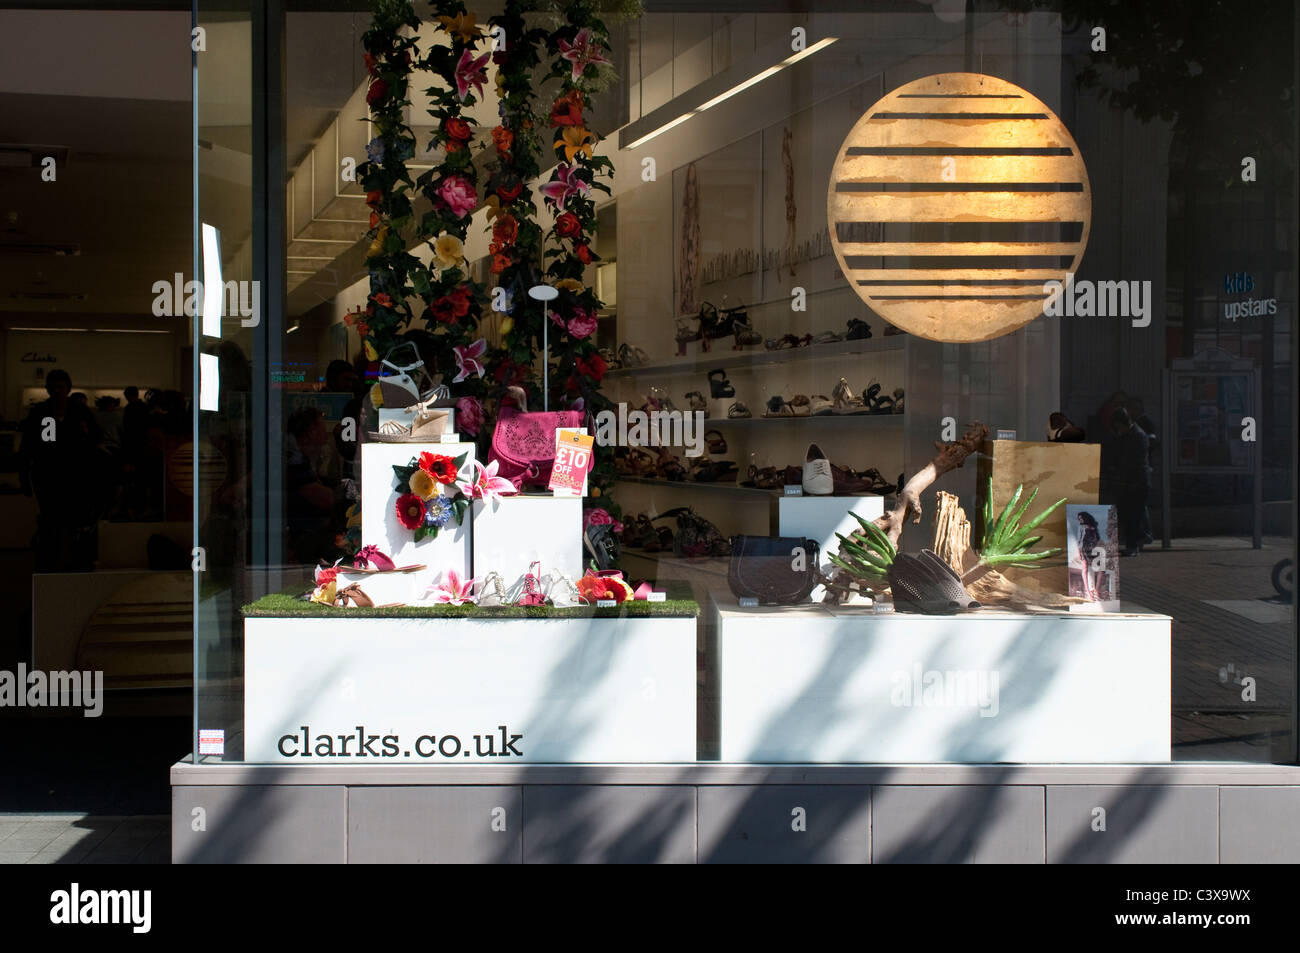 Magasin de chaussures Clarks, Kingston upon Thames, Surrey, UK Banque D'Images